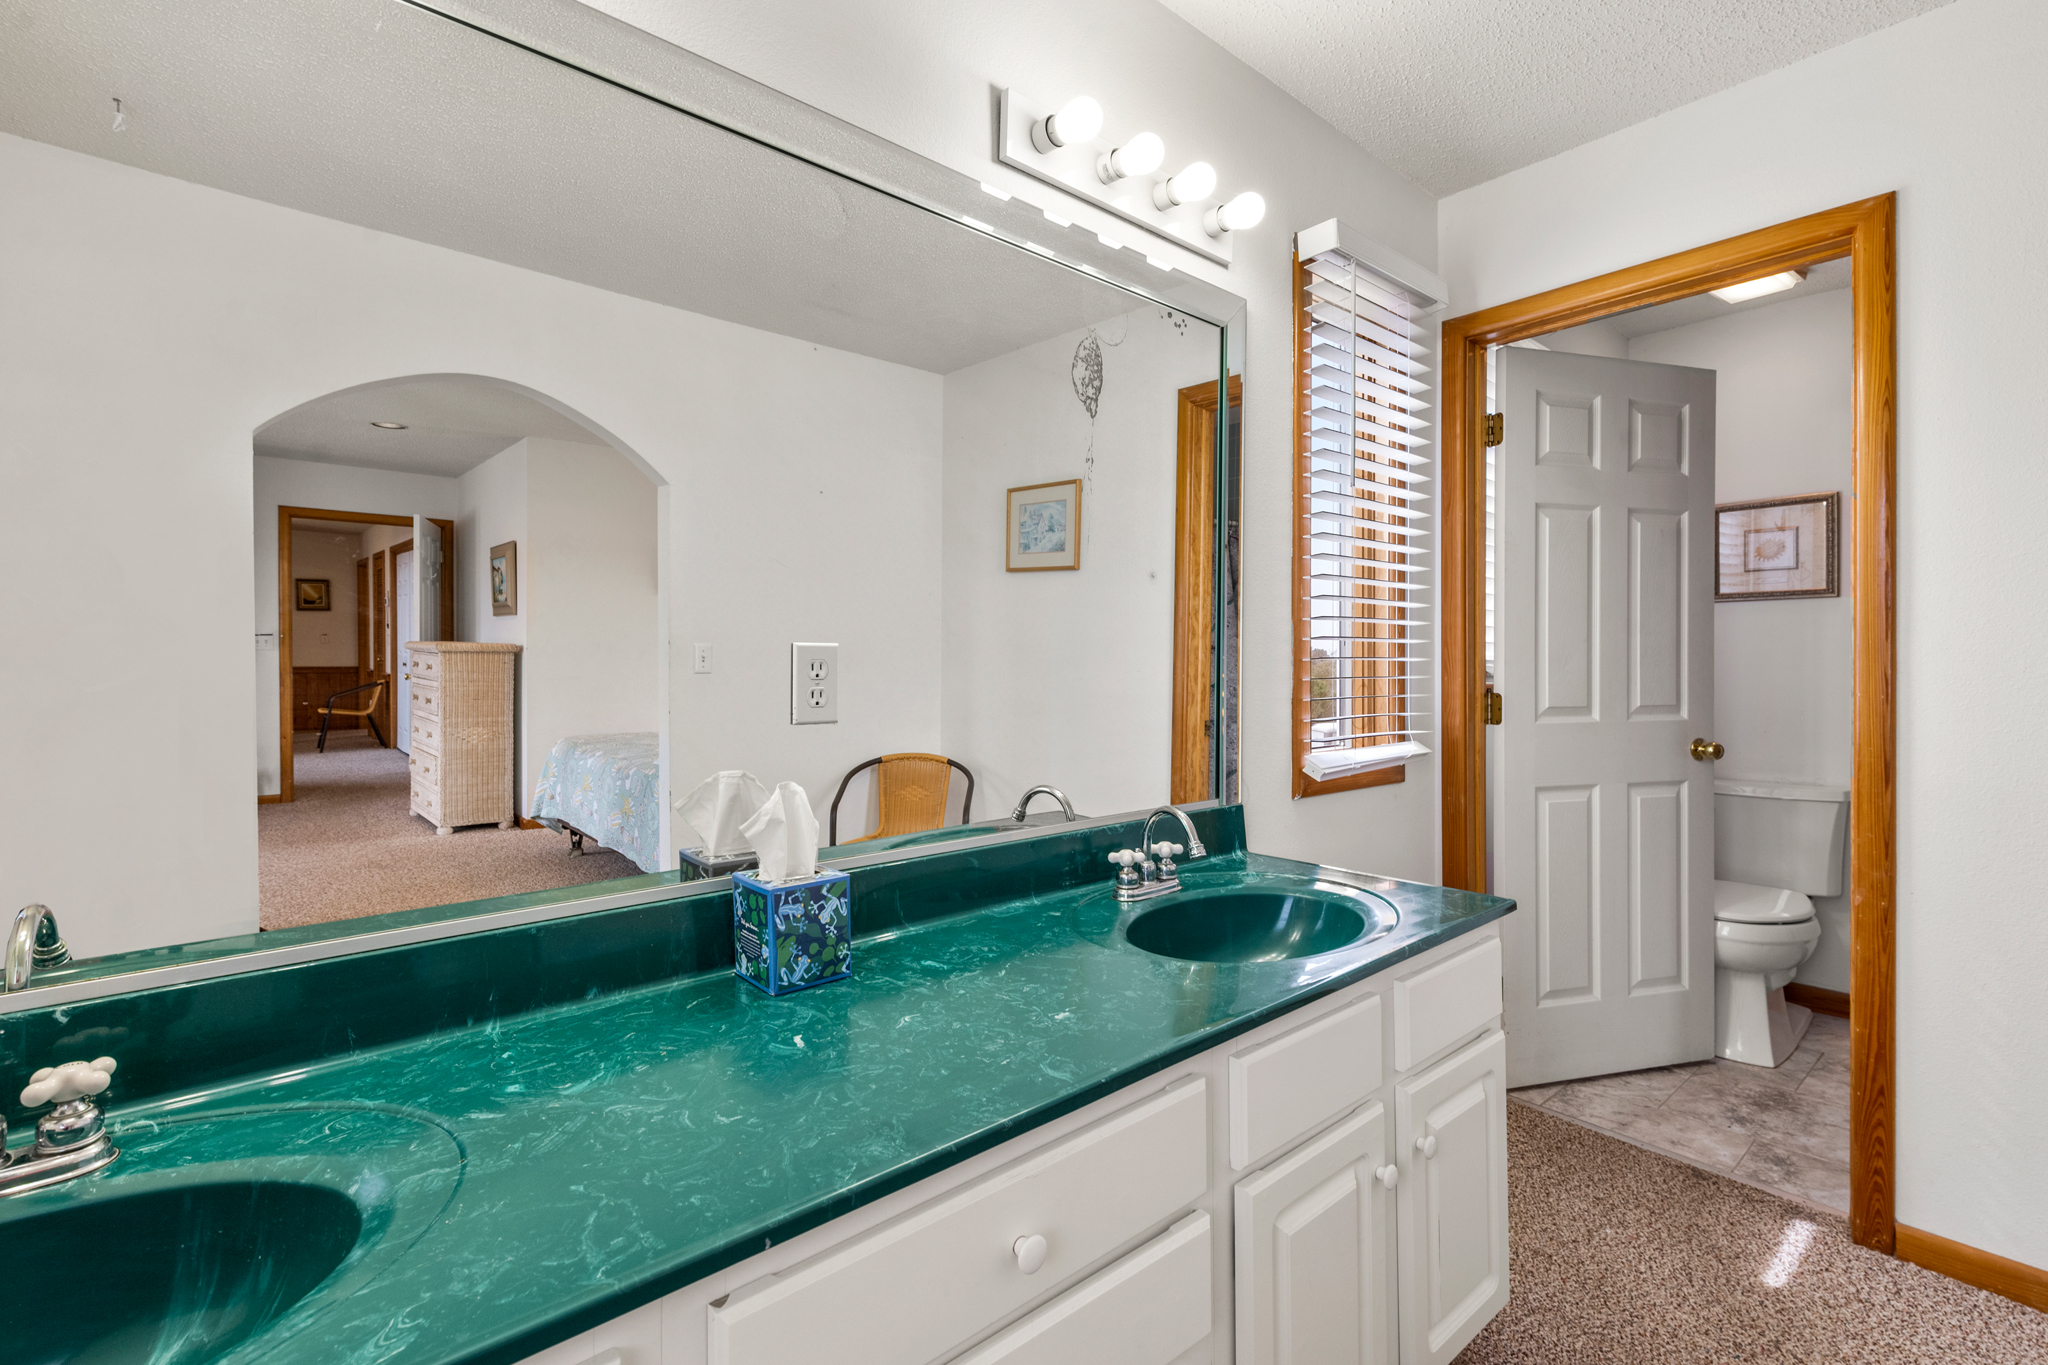 WH620: La Playa | Mid Level Bedroom 5 Private Bath